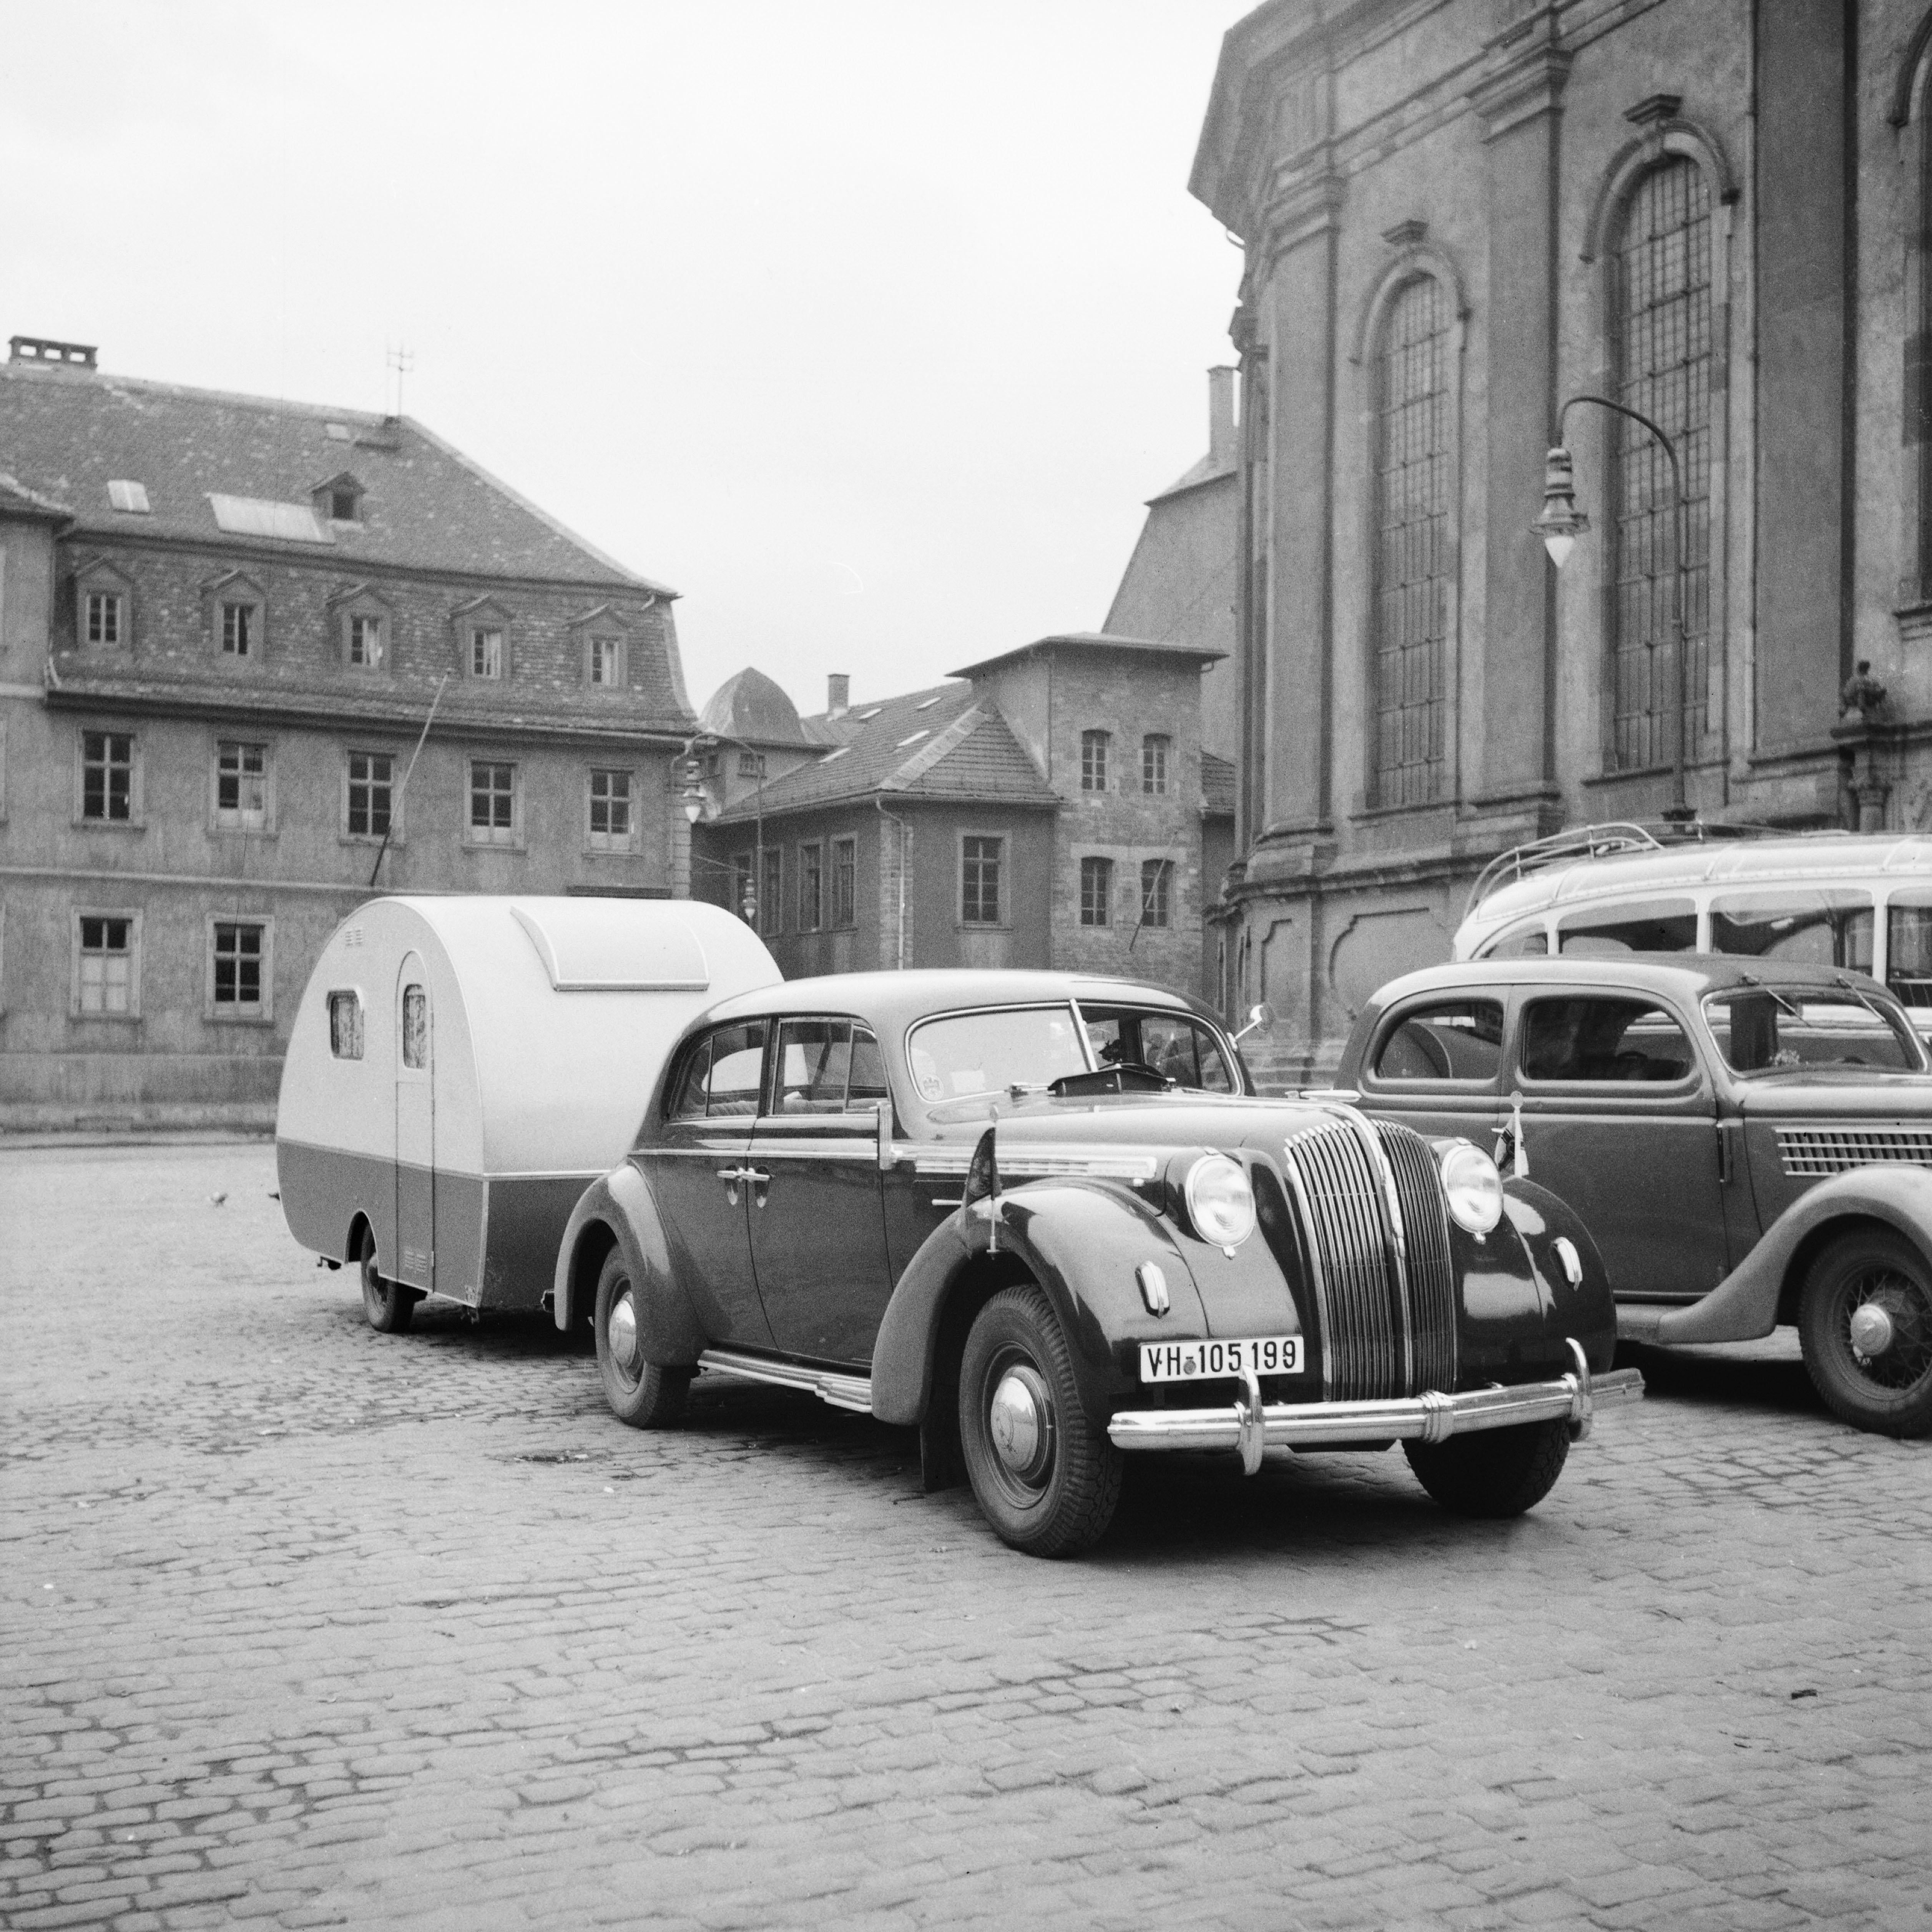 Karl Heinrich Lämmel Black and White Photograph - Car, trailer at Heiligeistkriche church Heidelberg, Germany 1938, Printed Later 